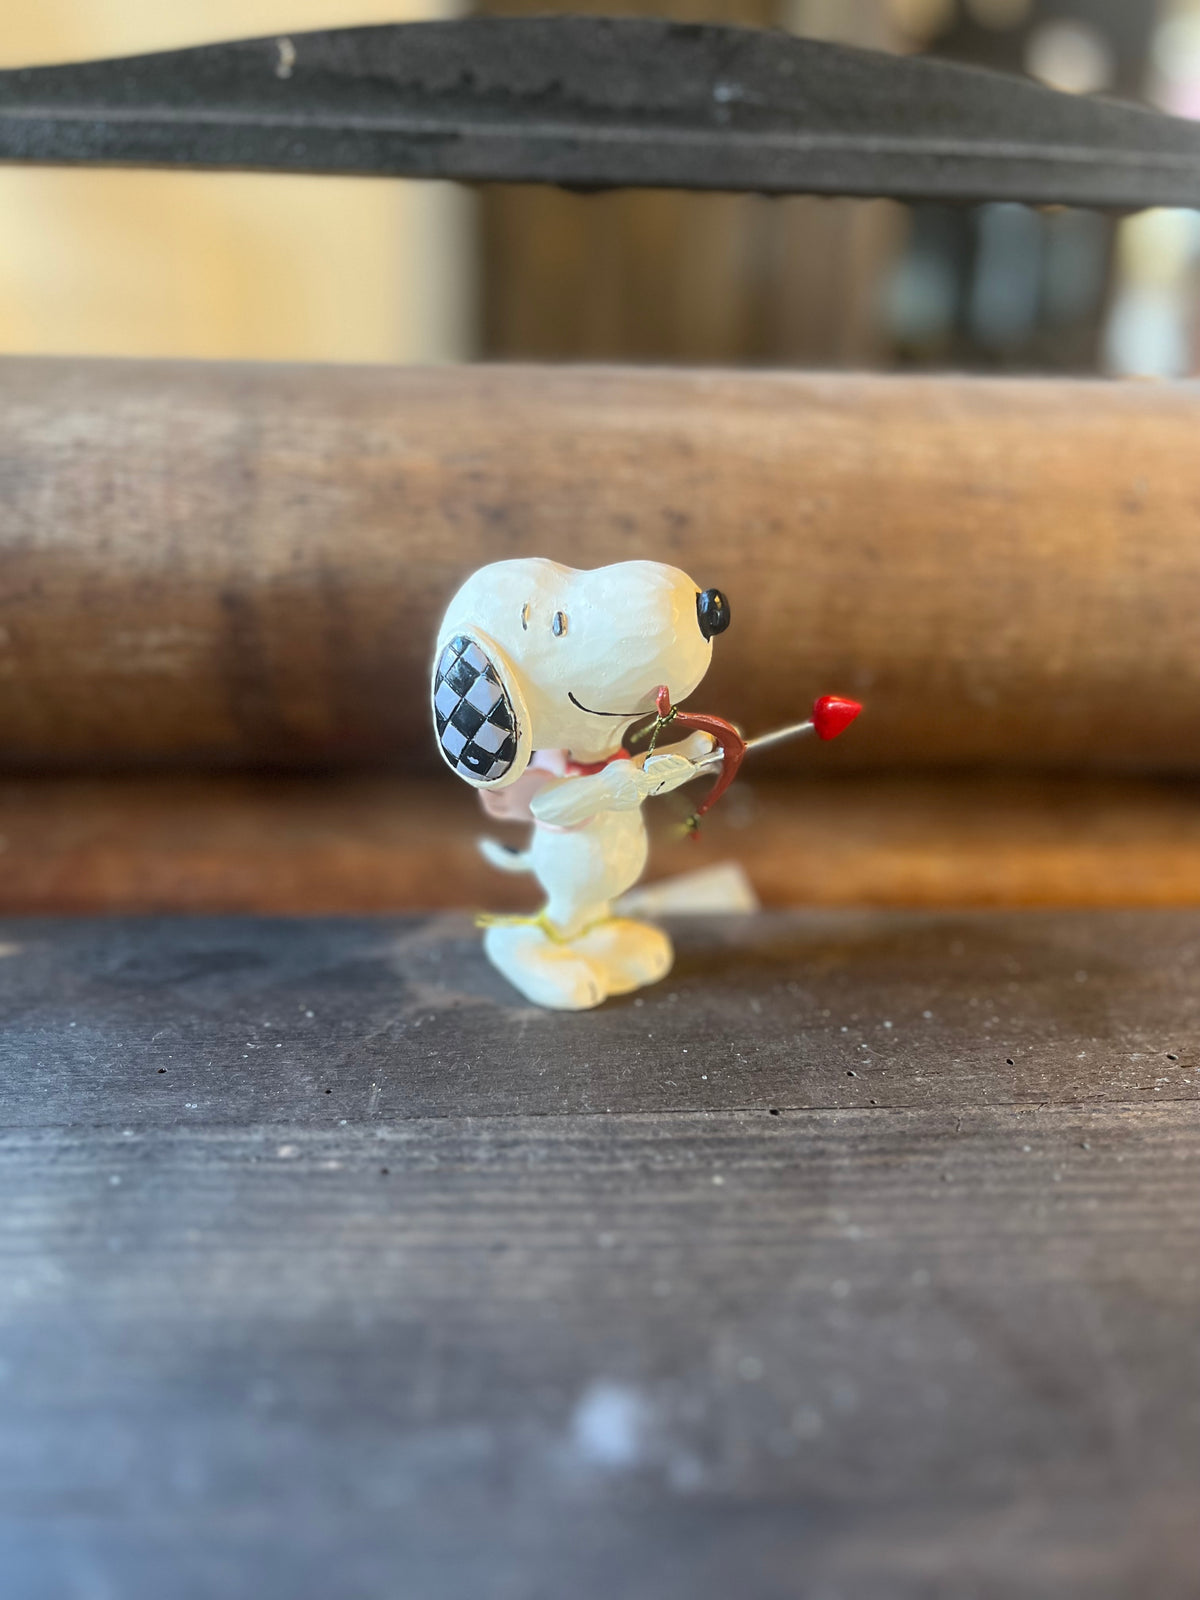 Snoopy Cupid Mini